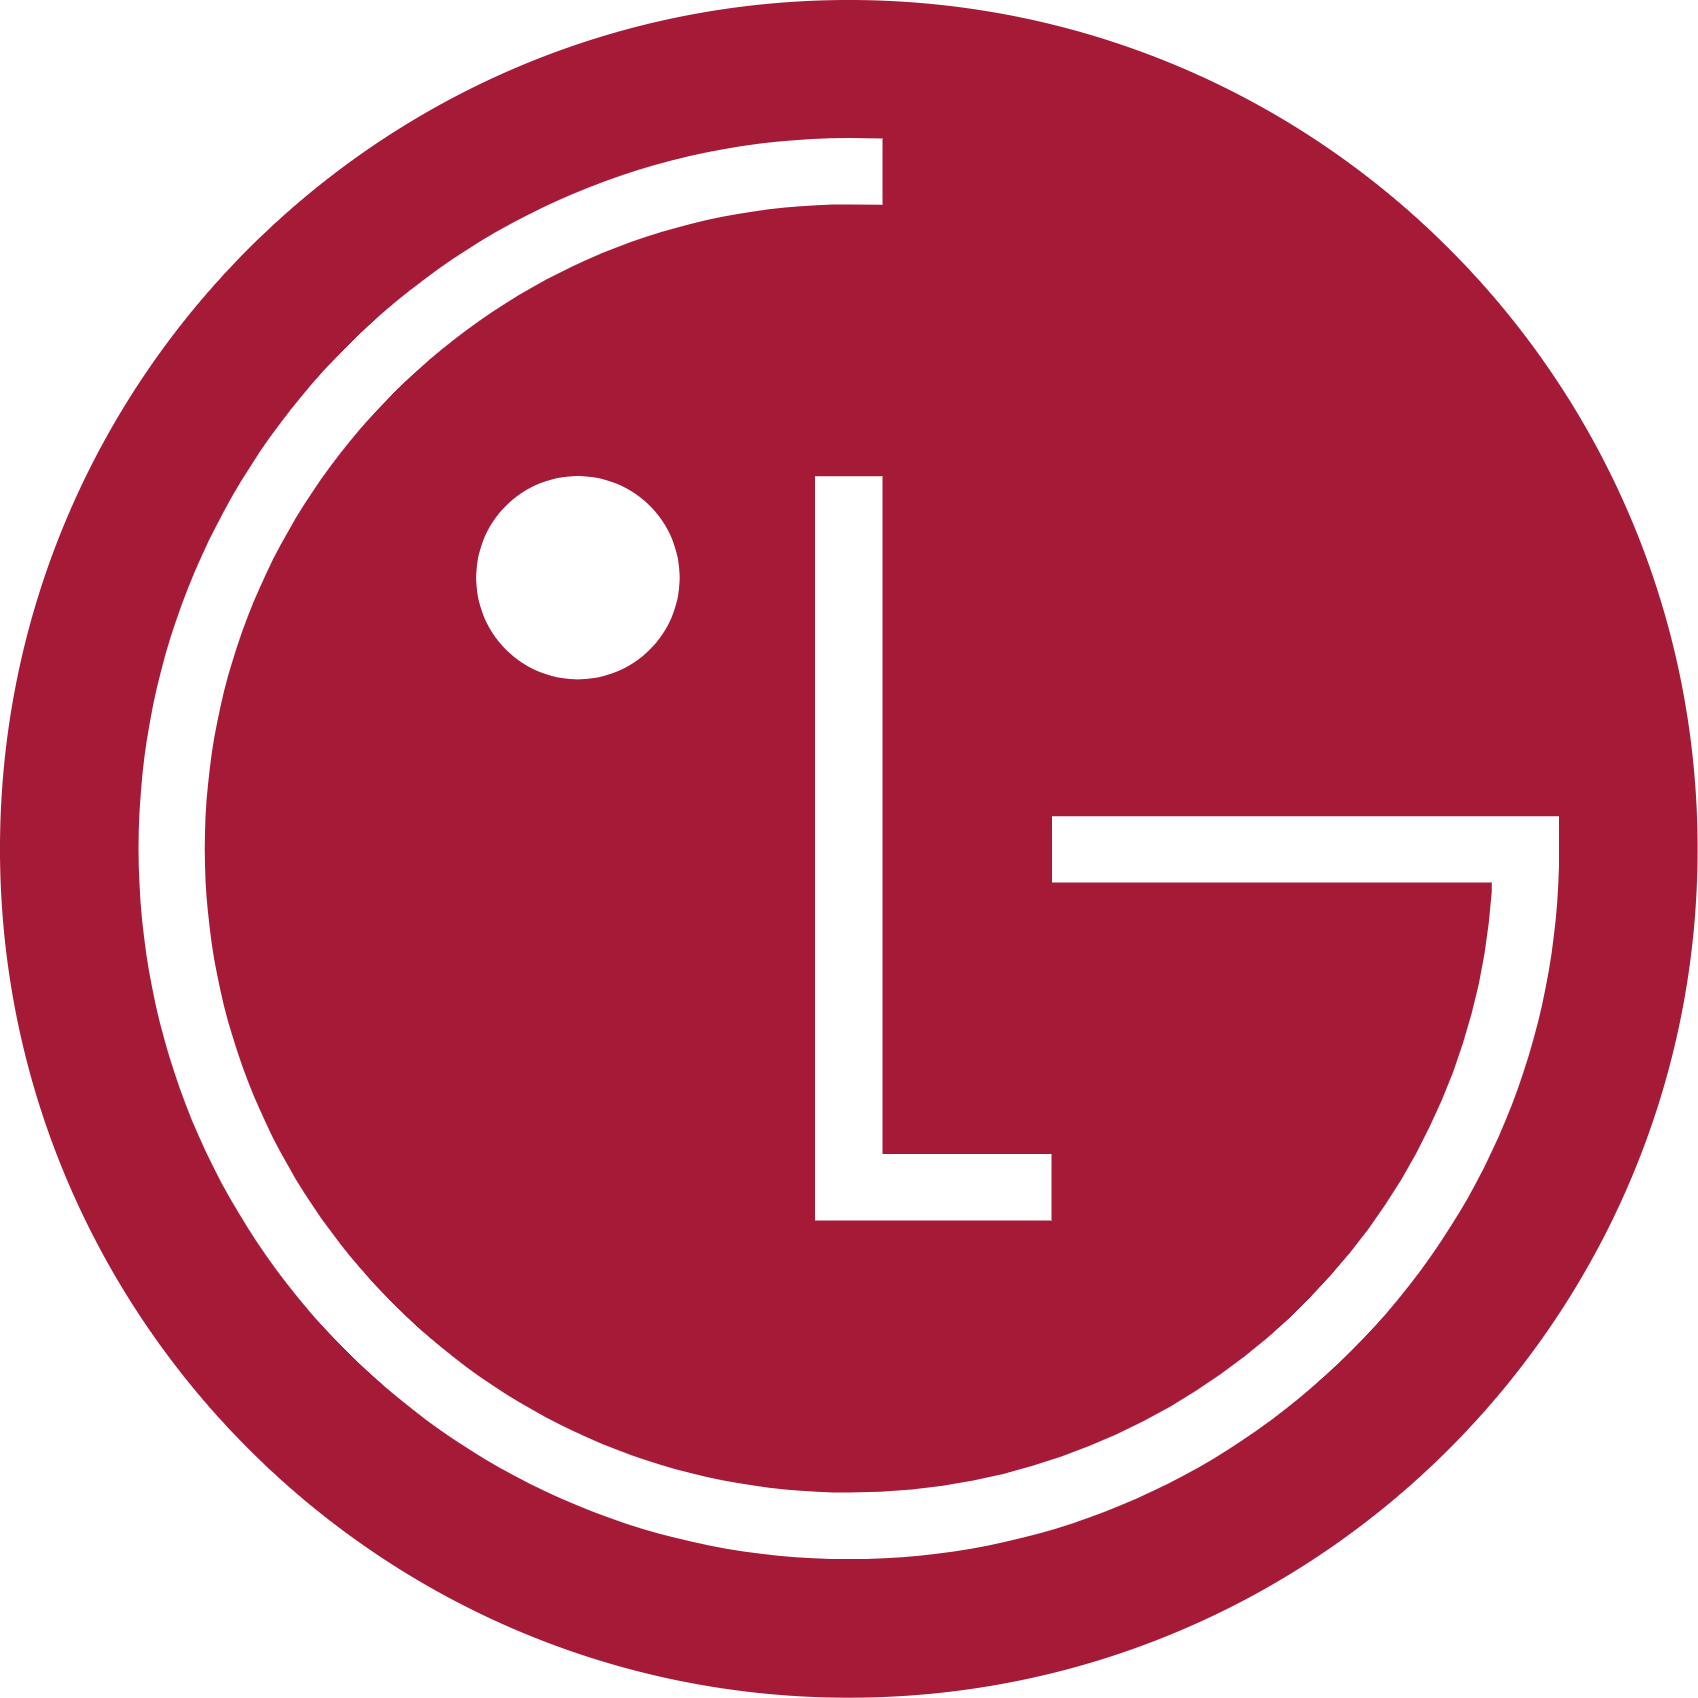 Download lg logo png transparent background for free